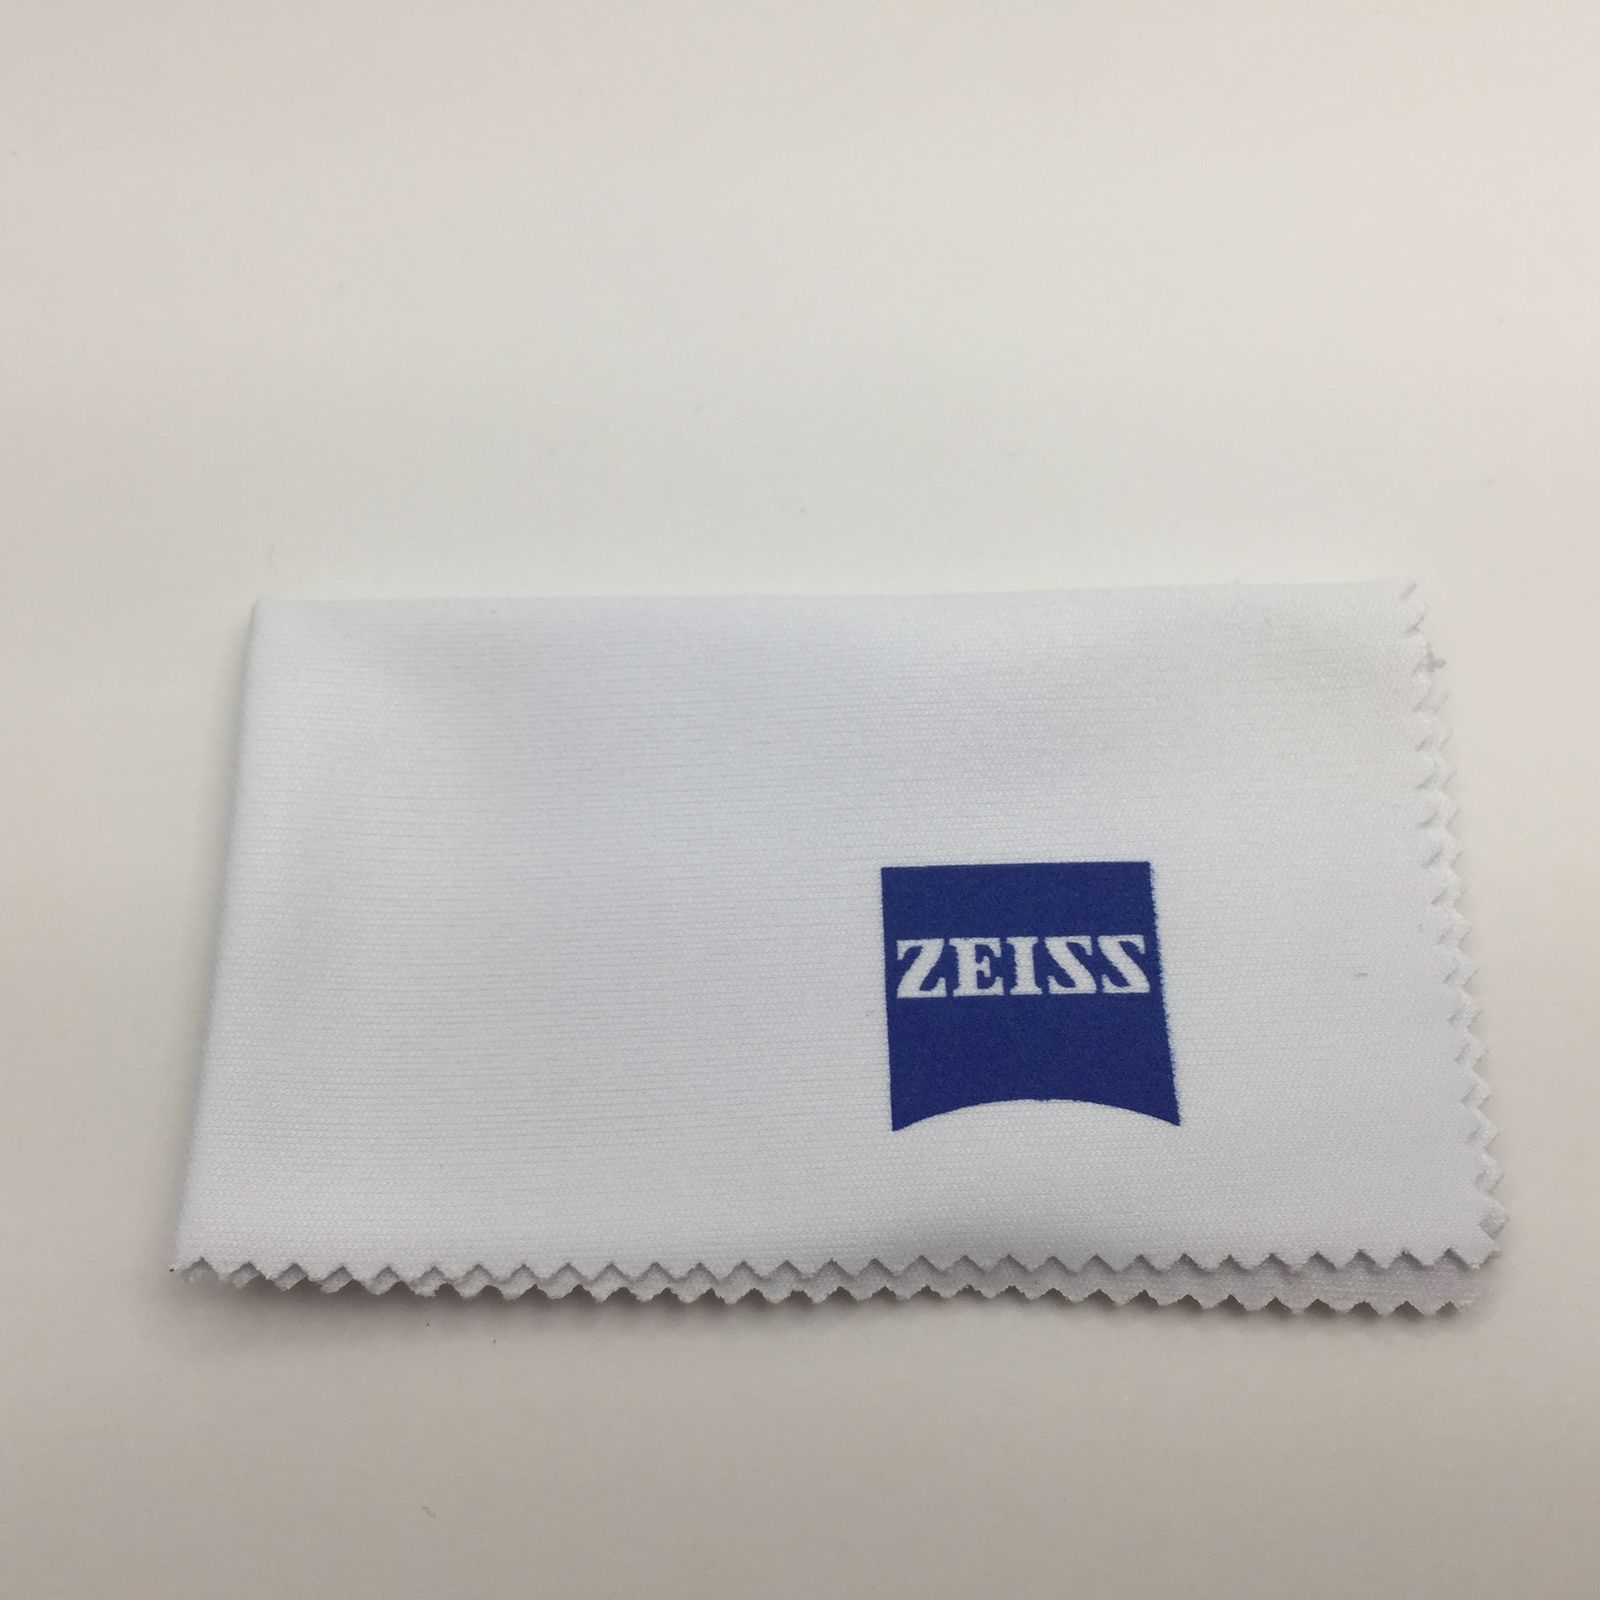 دستمال عینک زایس مدل ZZ2021 -  - 3